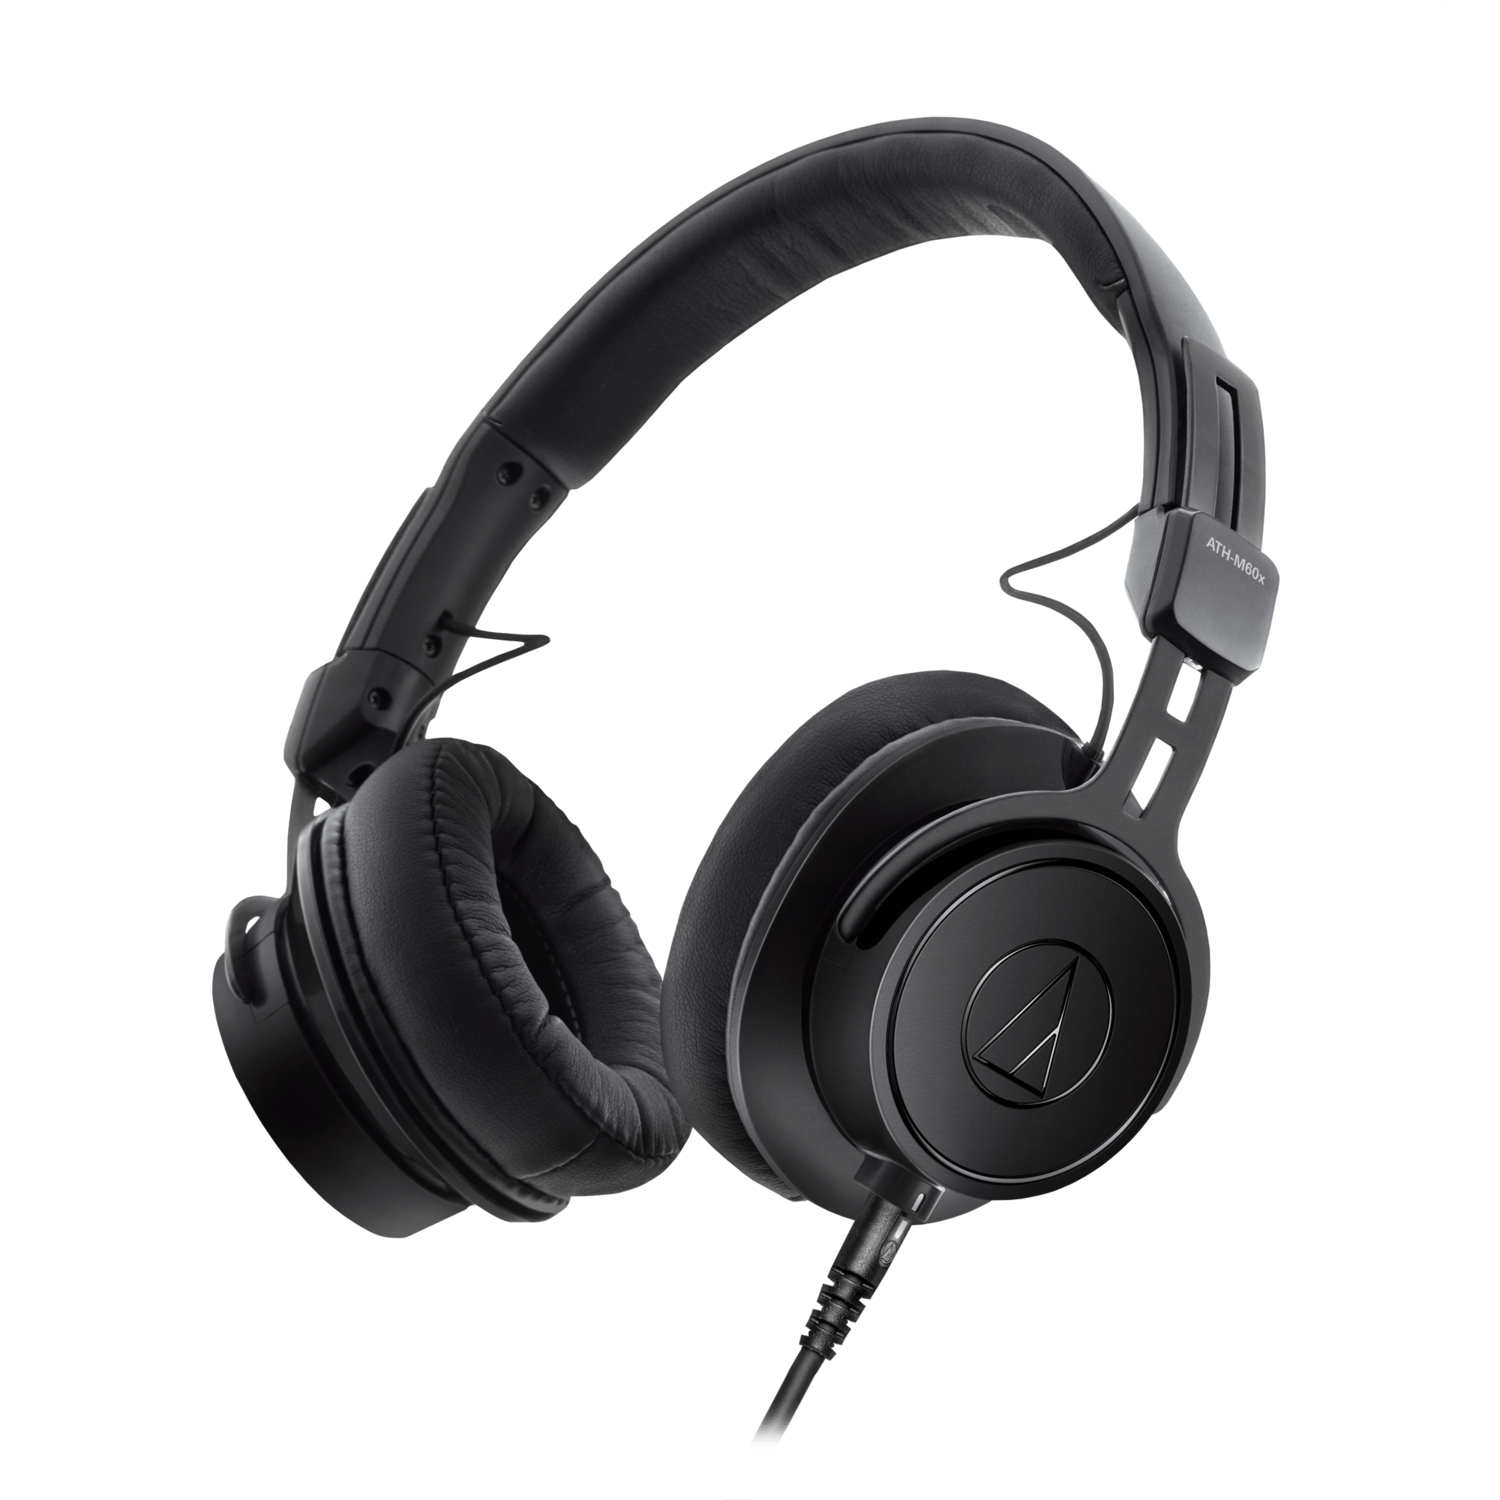 Audio Technica On-Ear Professional Monitor Headphones
ATH-M60x